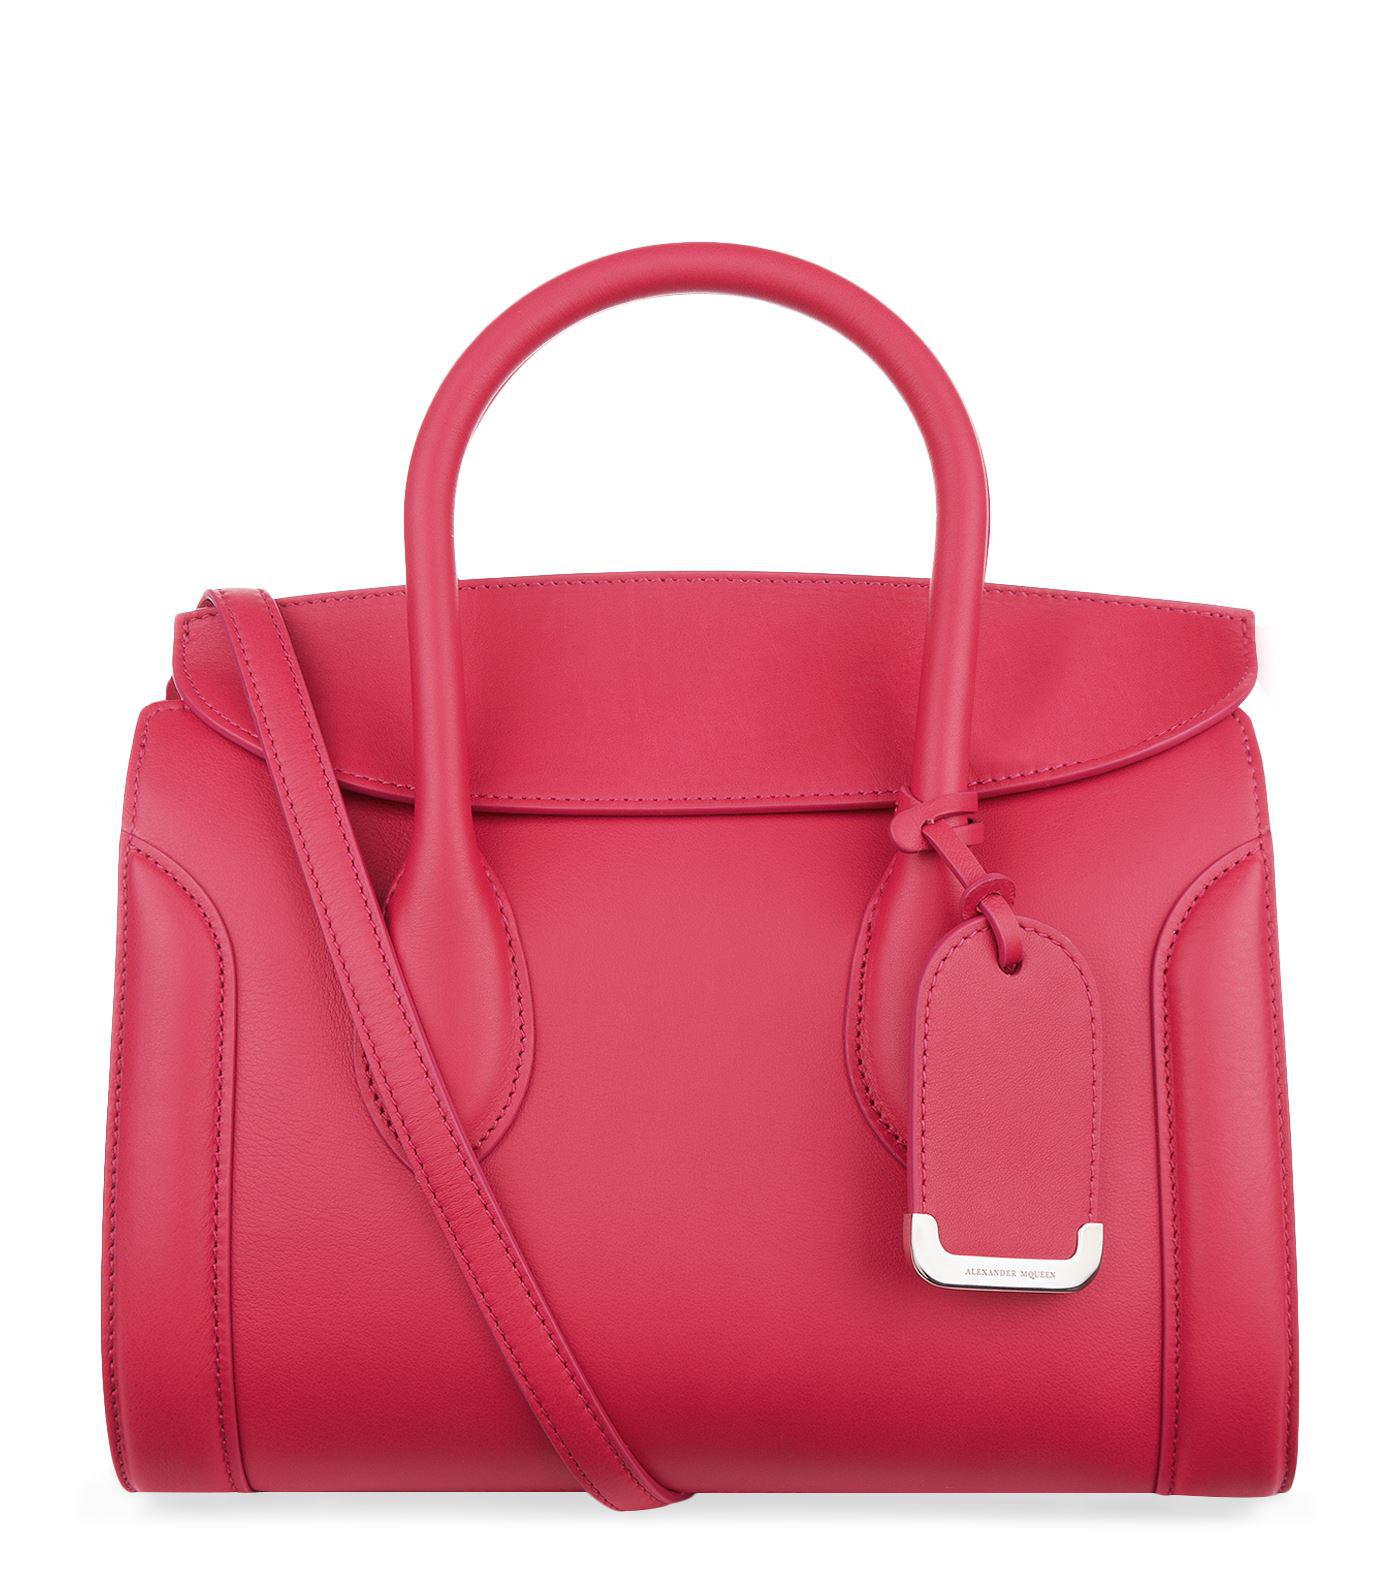 Alexander McQueen Leather Heroine 30 Bag in Pink - Lyst